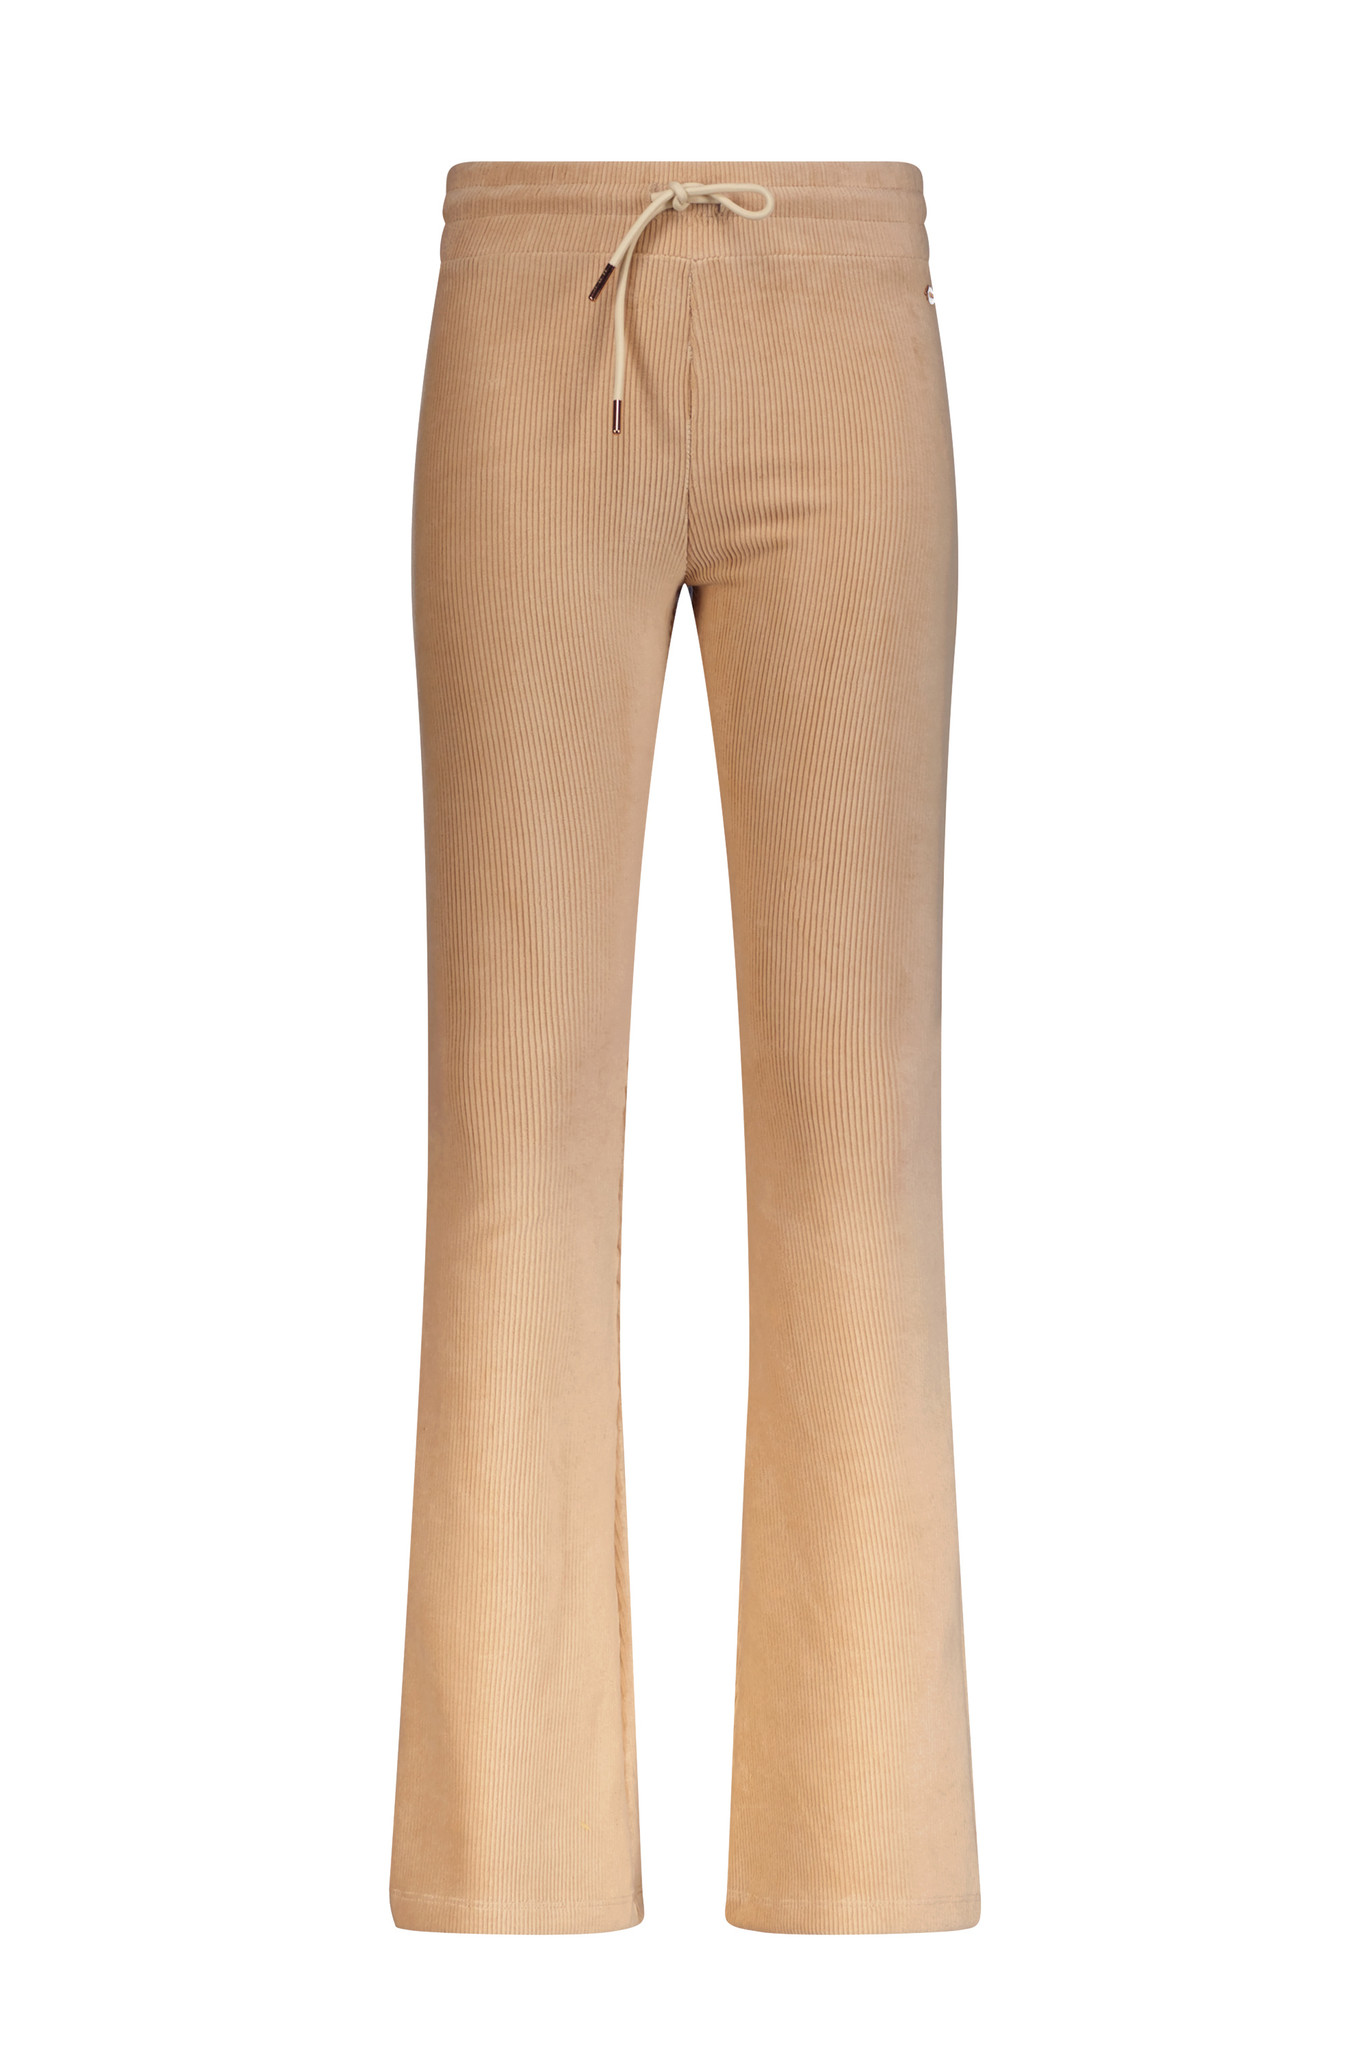 Nobell Sady B Tiny Velvet Flared Pants Broeken & Jumpsuits Meisjes - Jeans - Broekpak - Camel - Maat 122/128